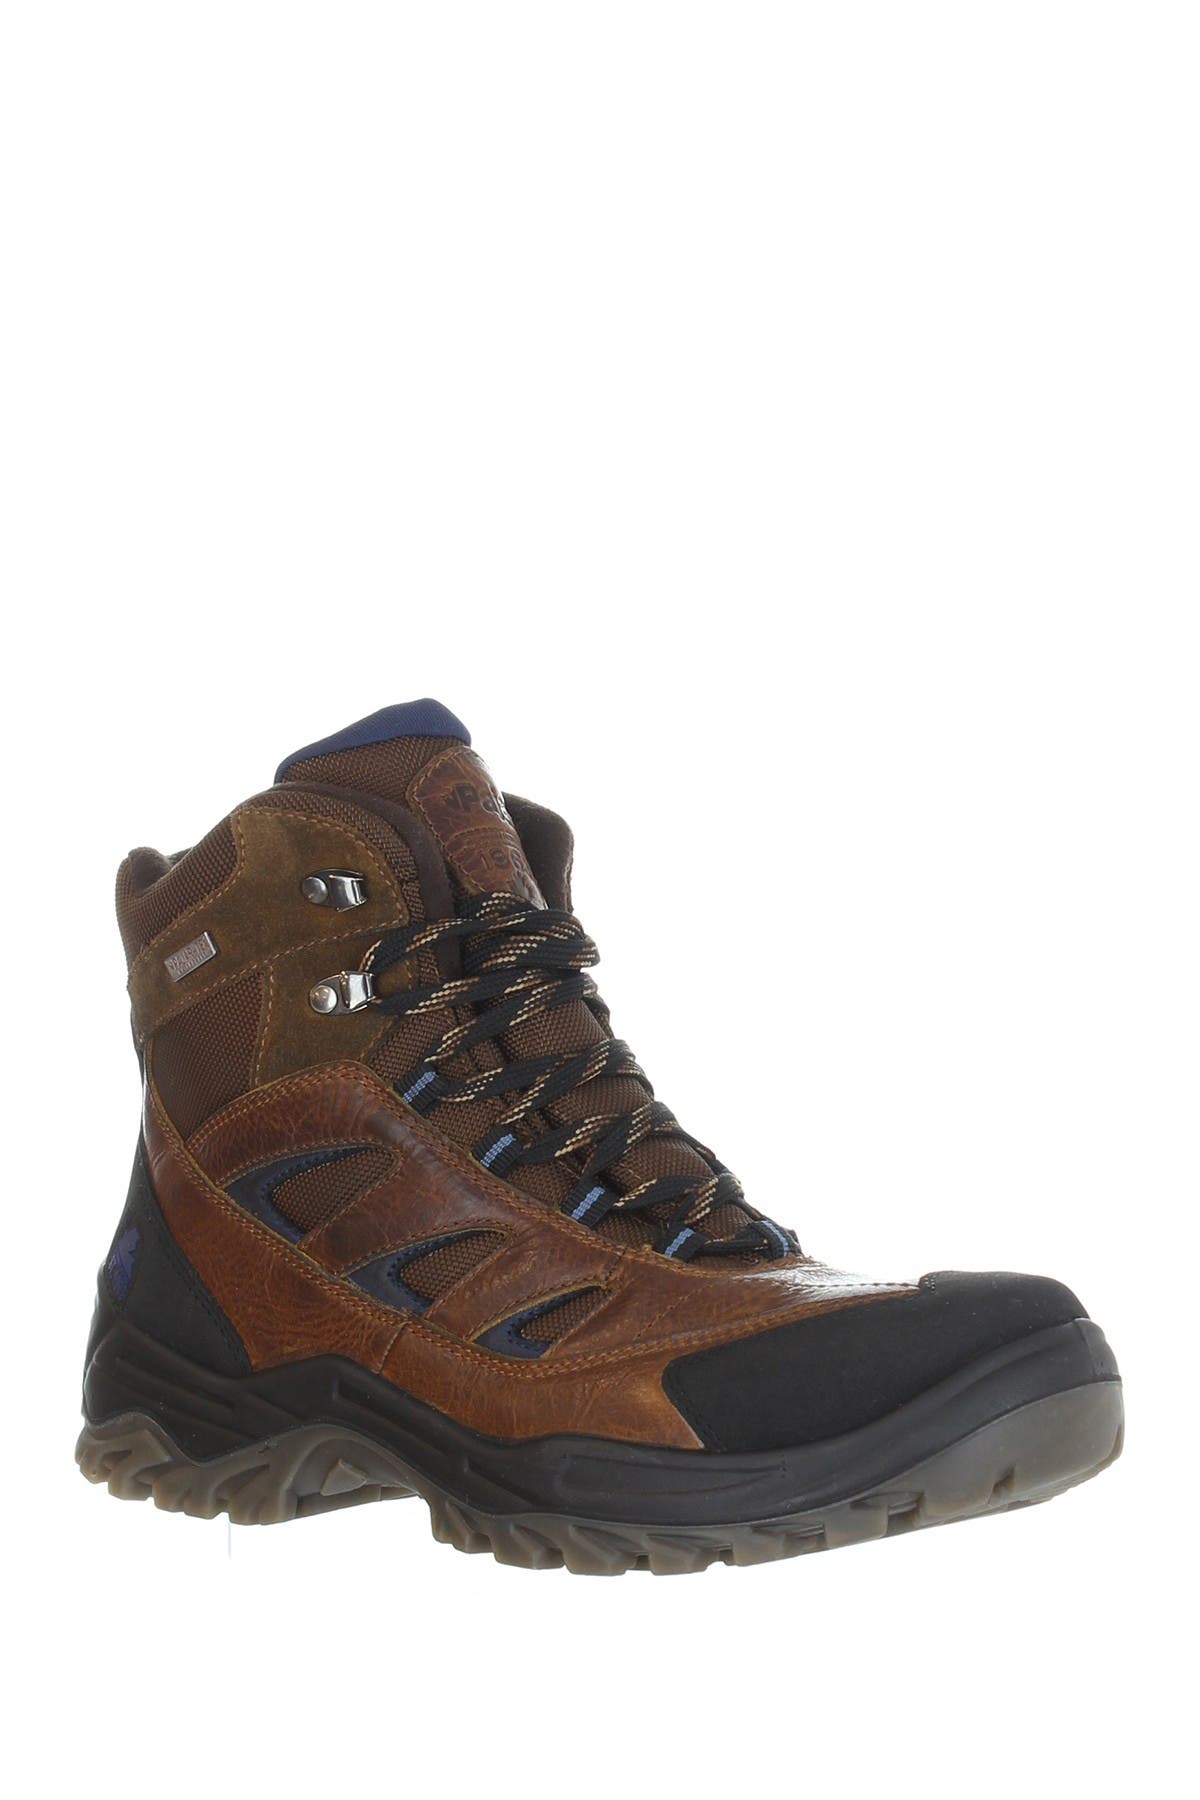 pajar hiking boots